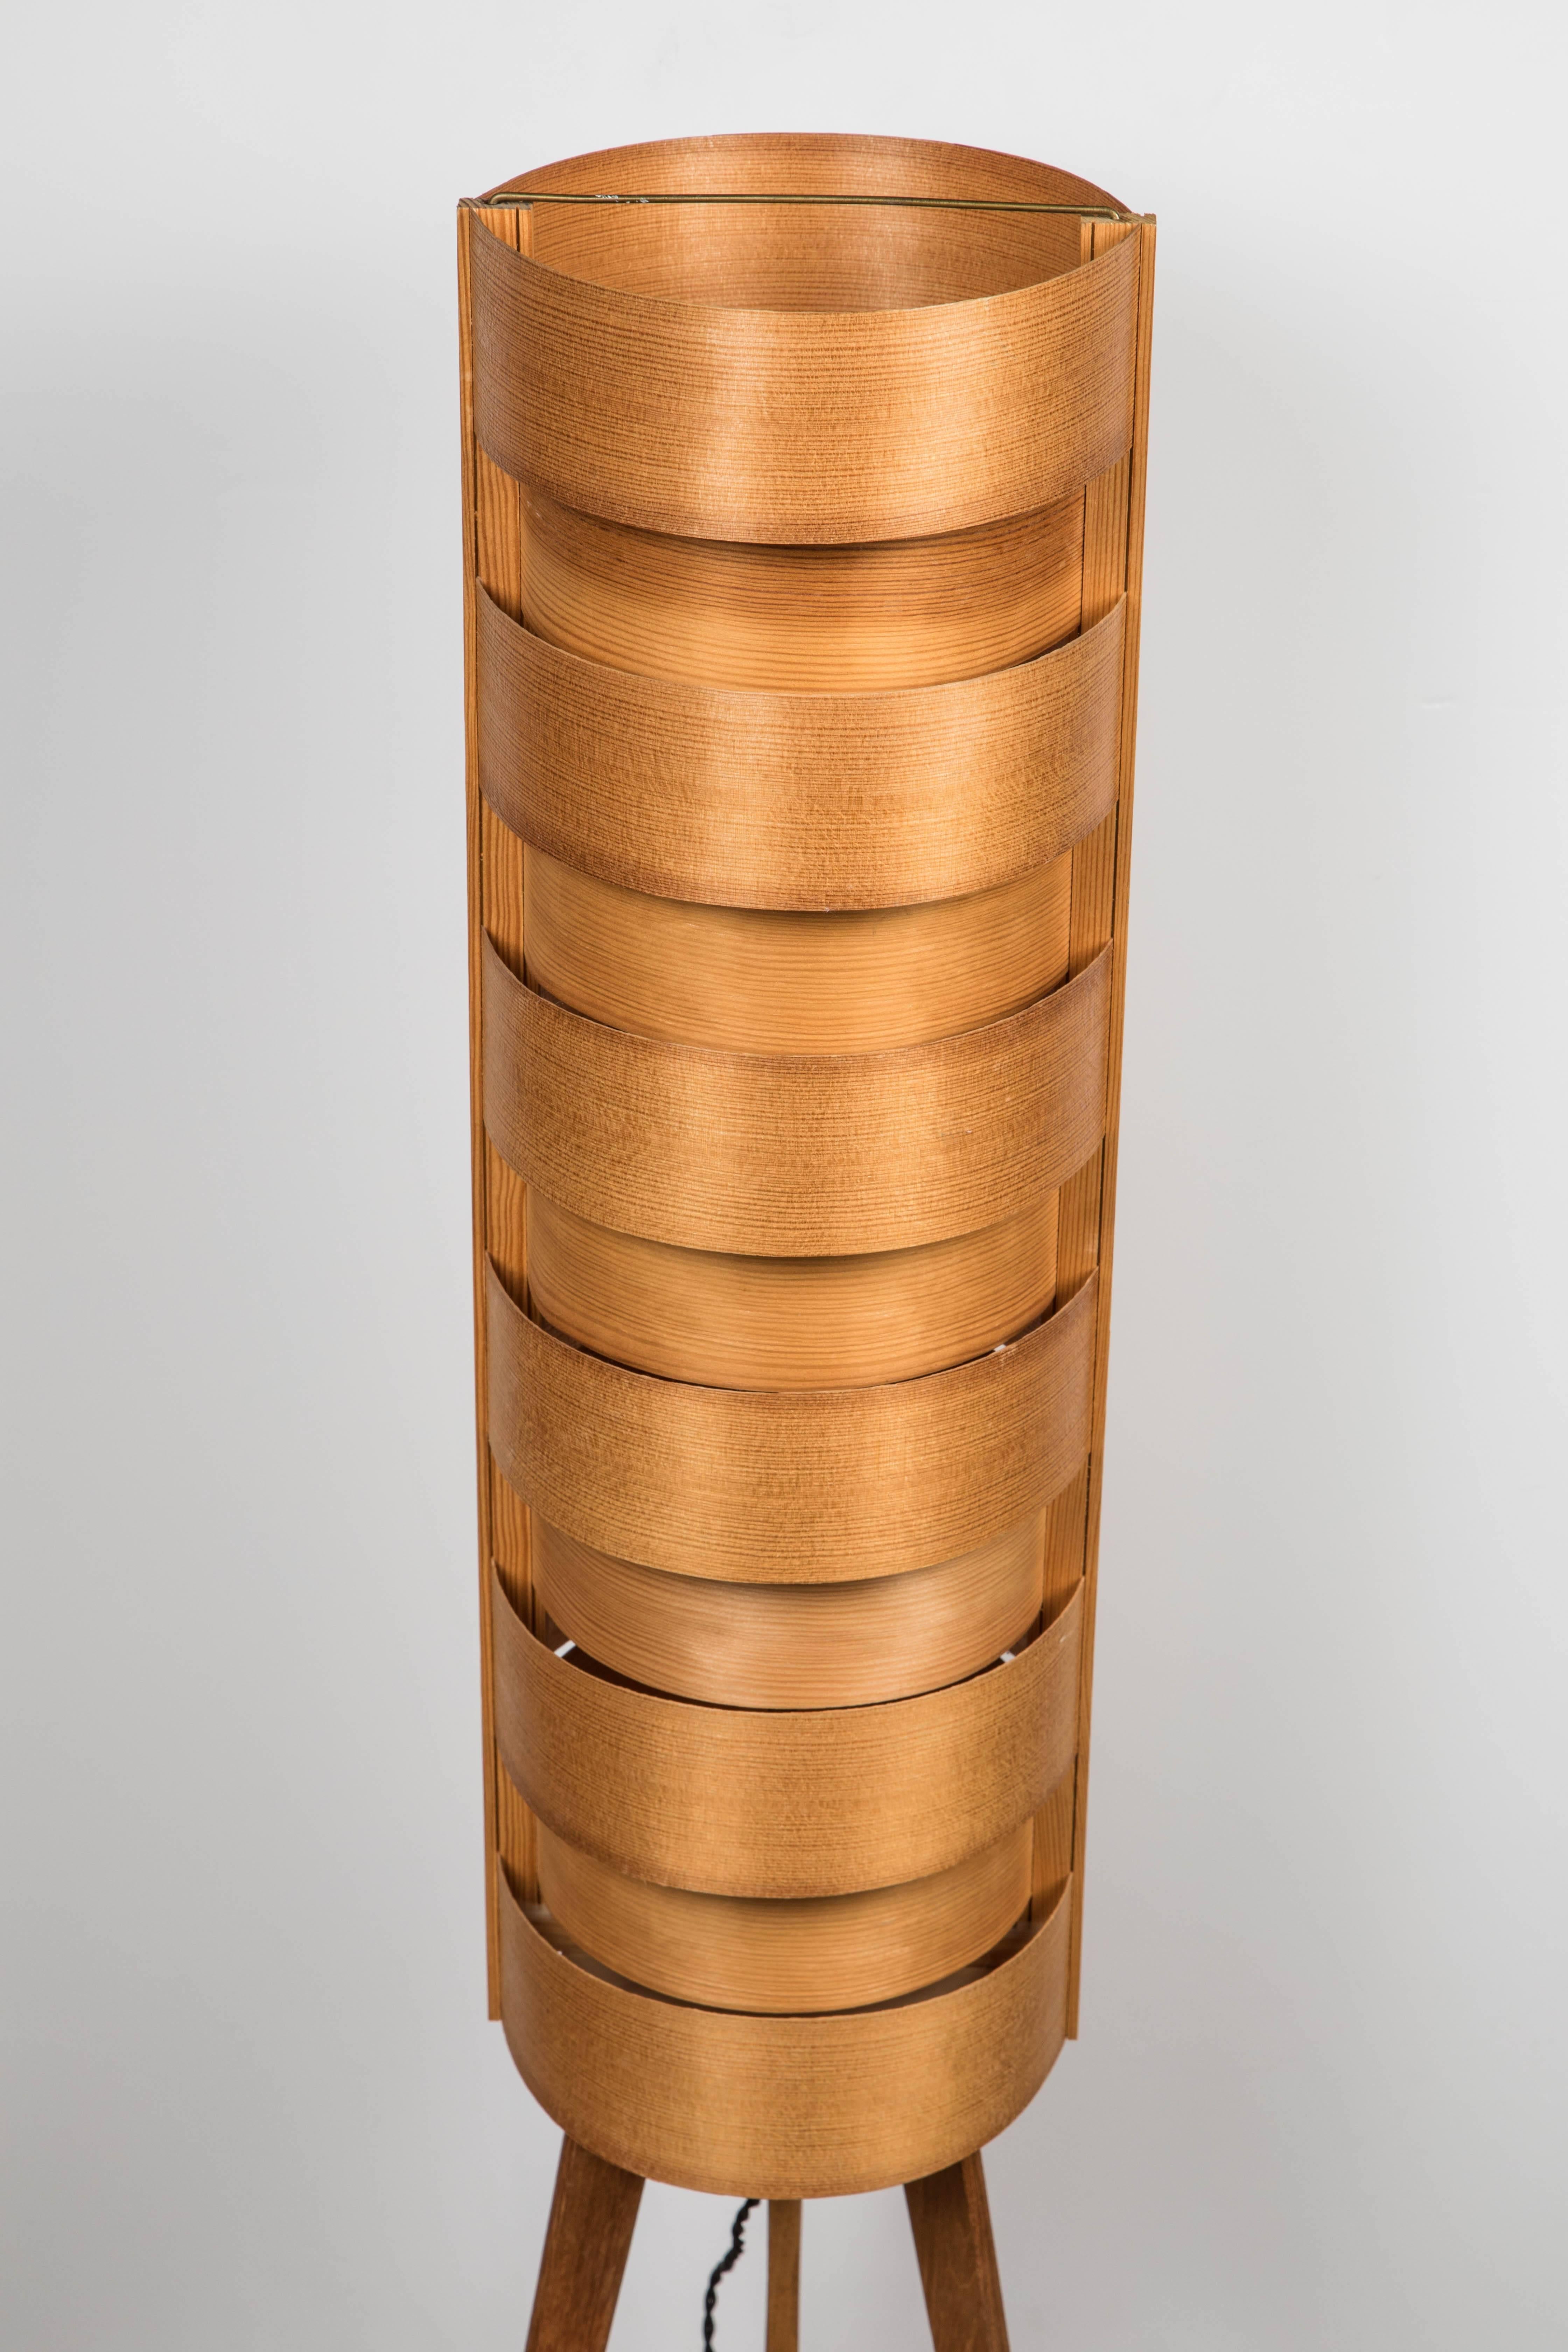 1960s Hans-Agne Jakobsson Wood Tripod Floor Lamp for AB Ellysett In Good Condition For Sale In Glendale, CA